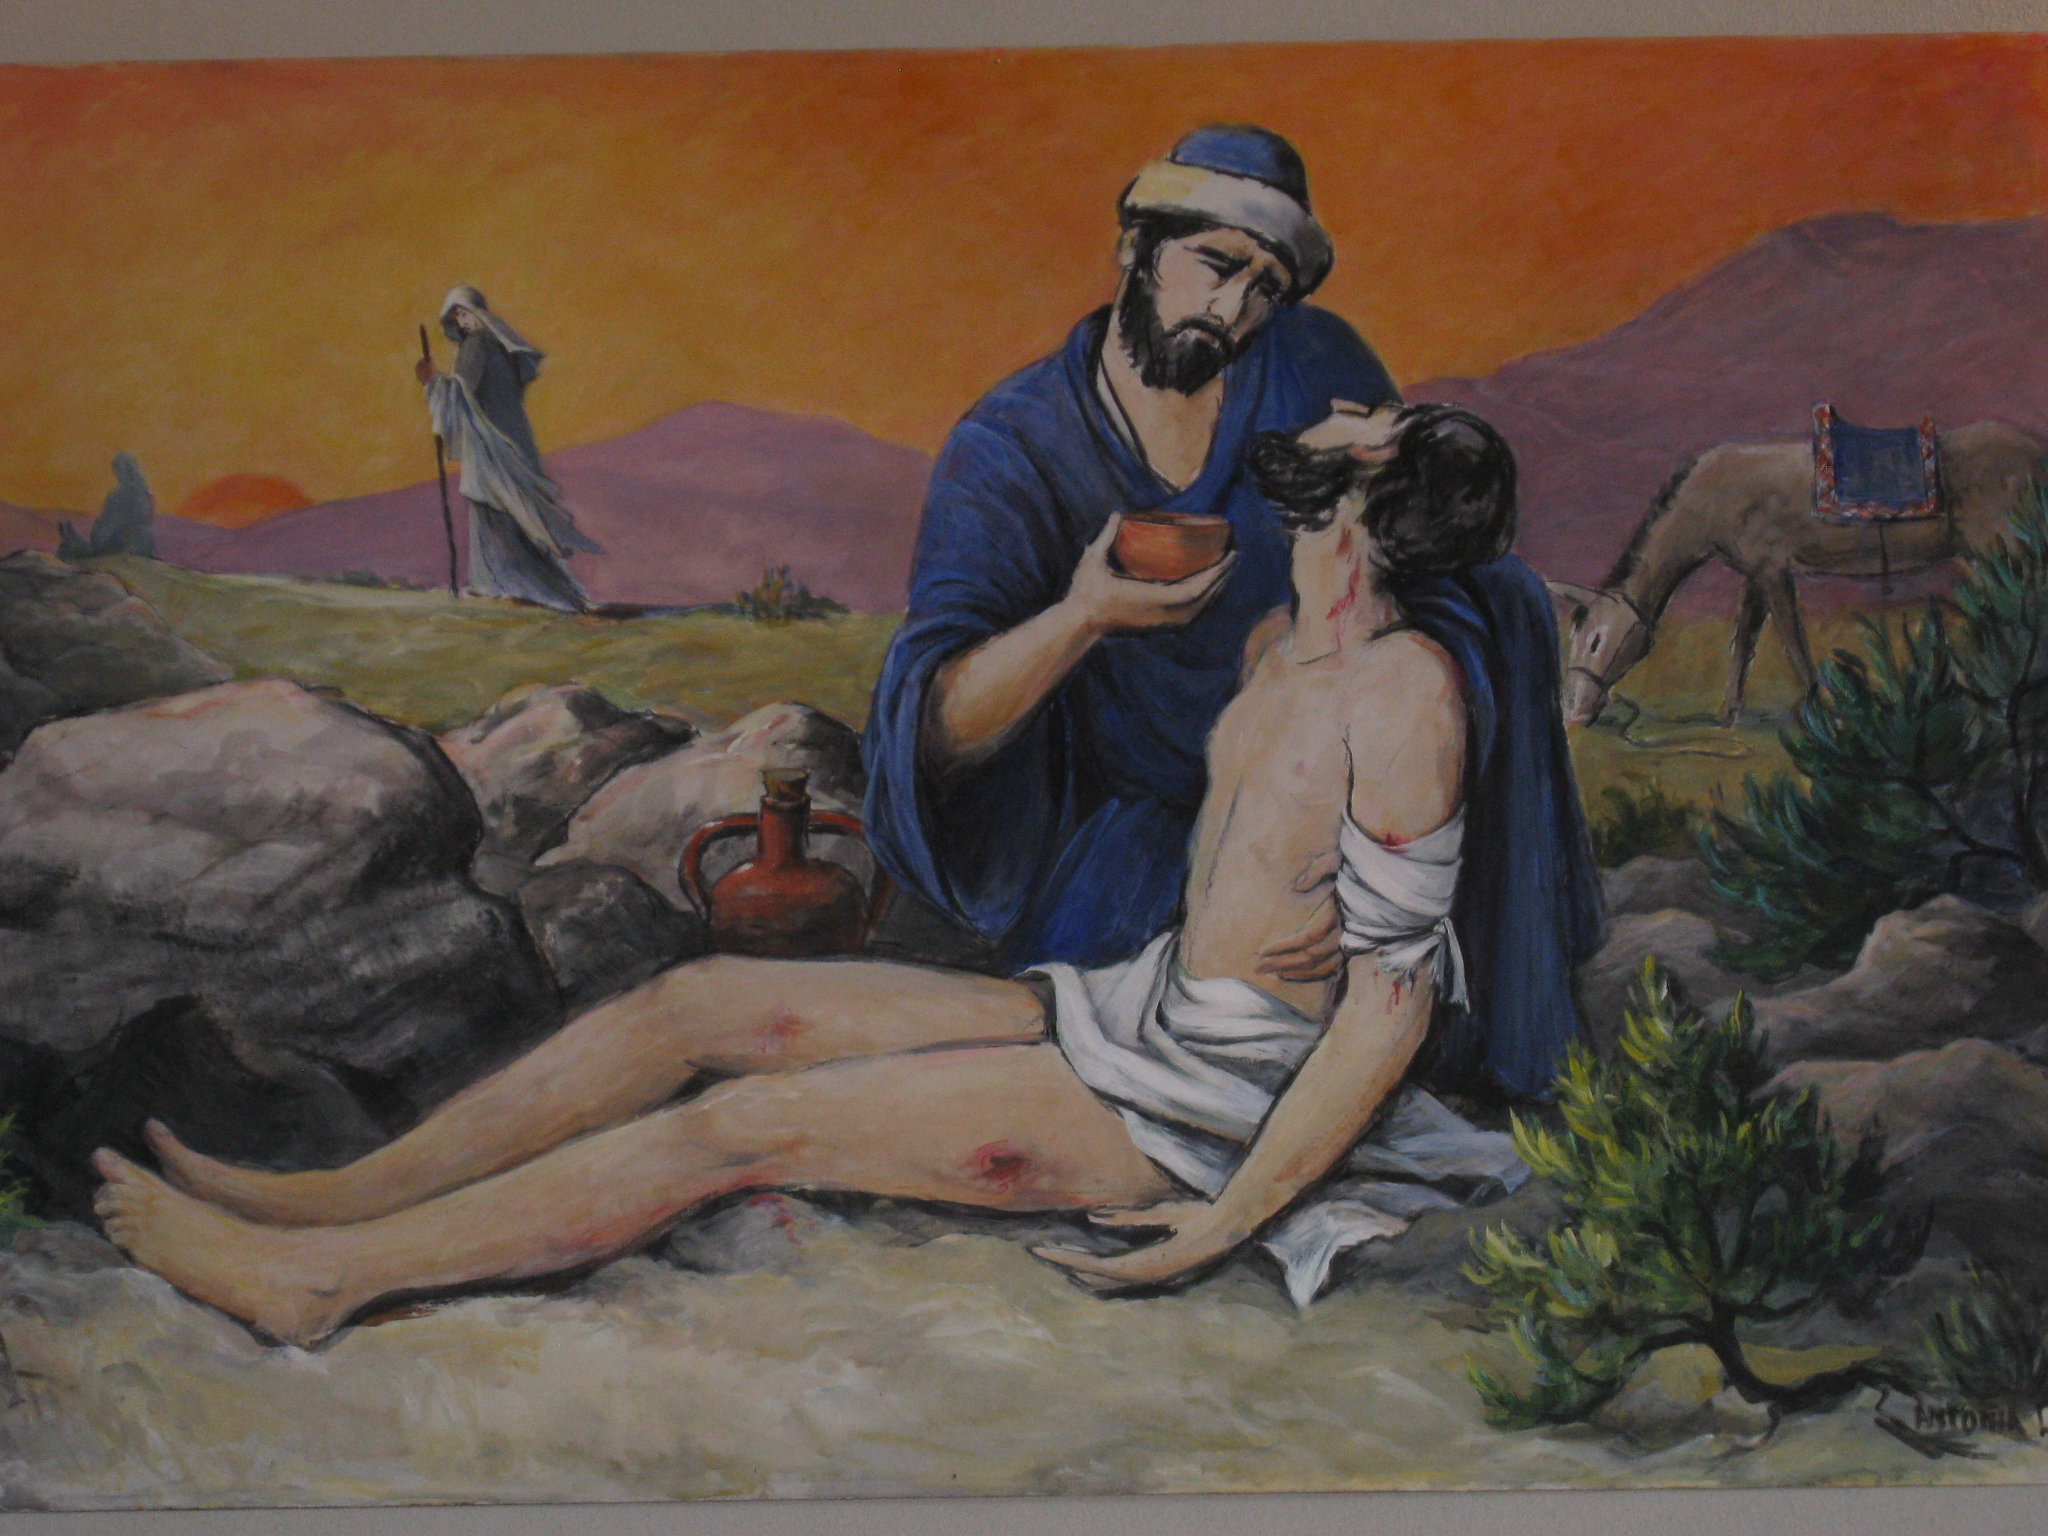 The good Samaritan. By artist Antonia Lanik Gabanek.